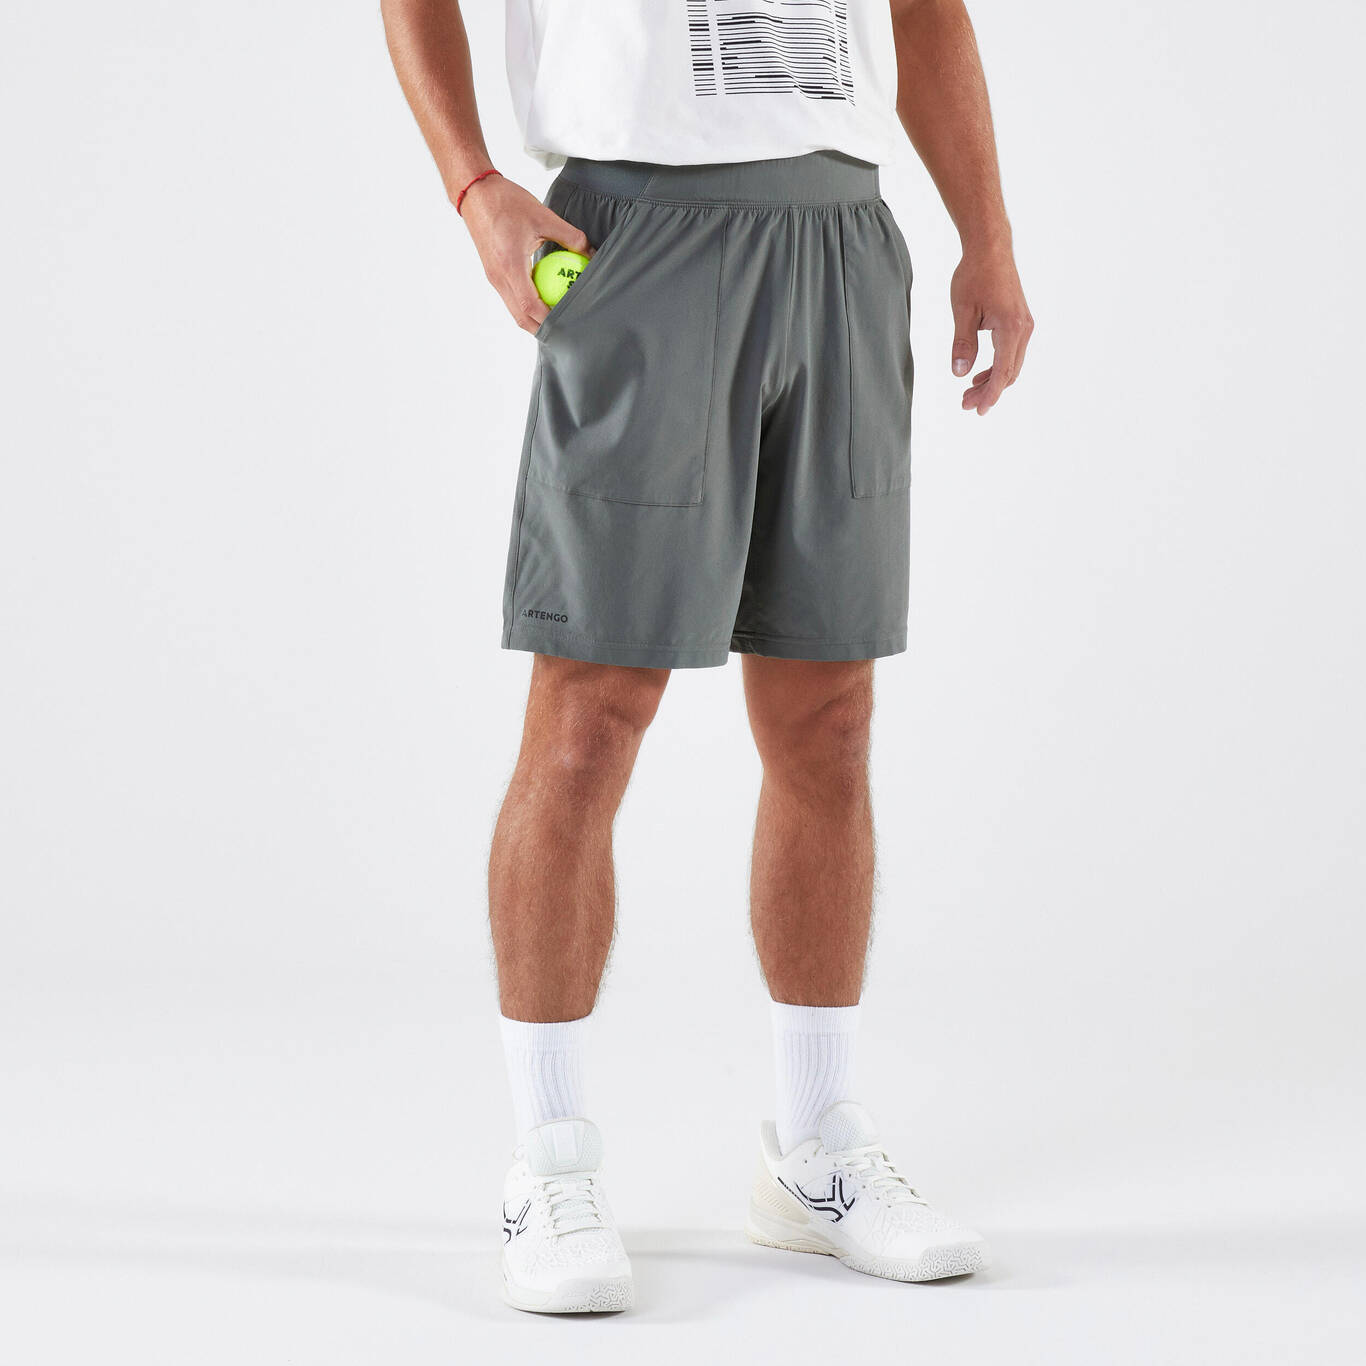 Men's Breathable Tennis Shorts Dry - Khaki